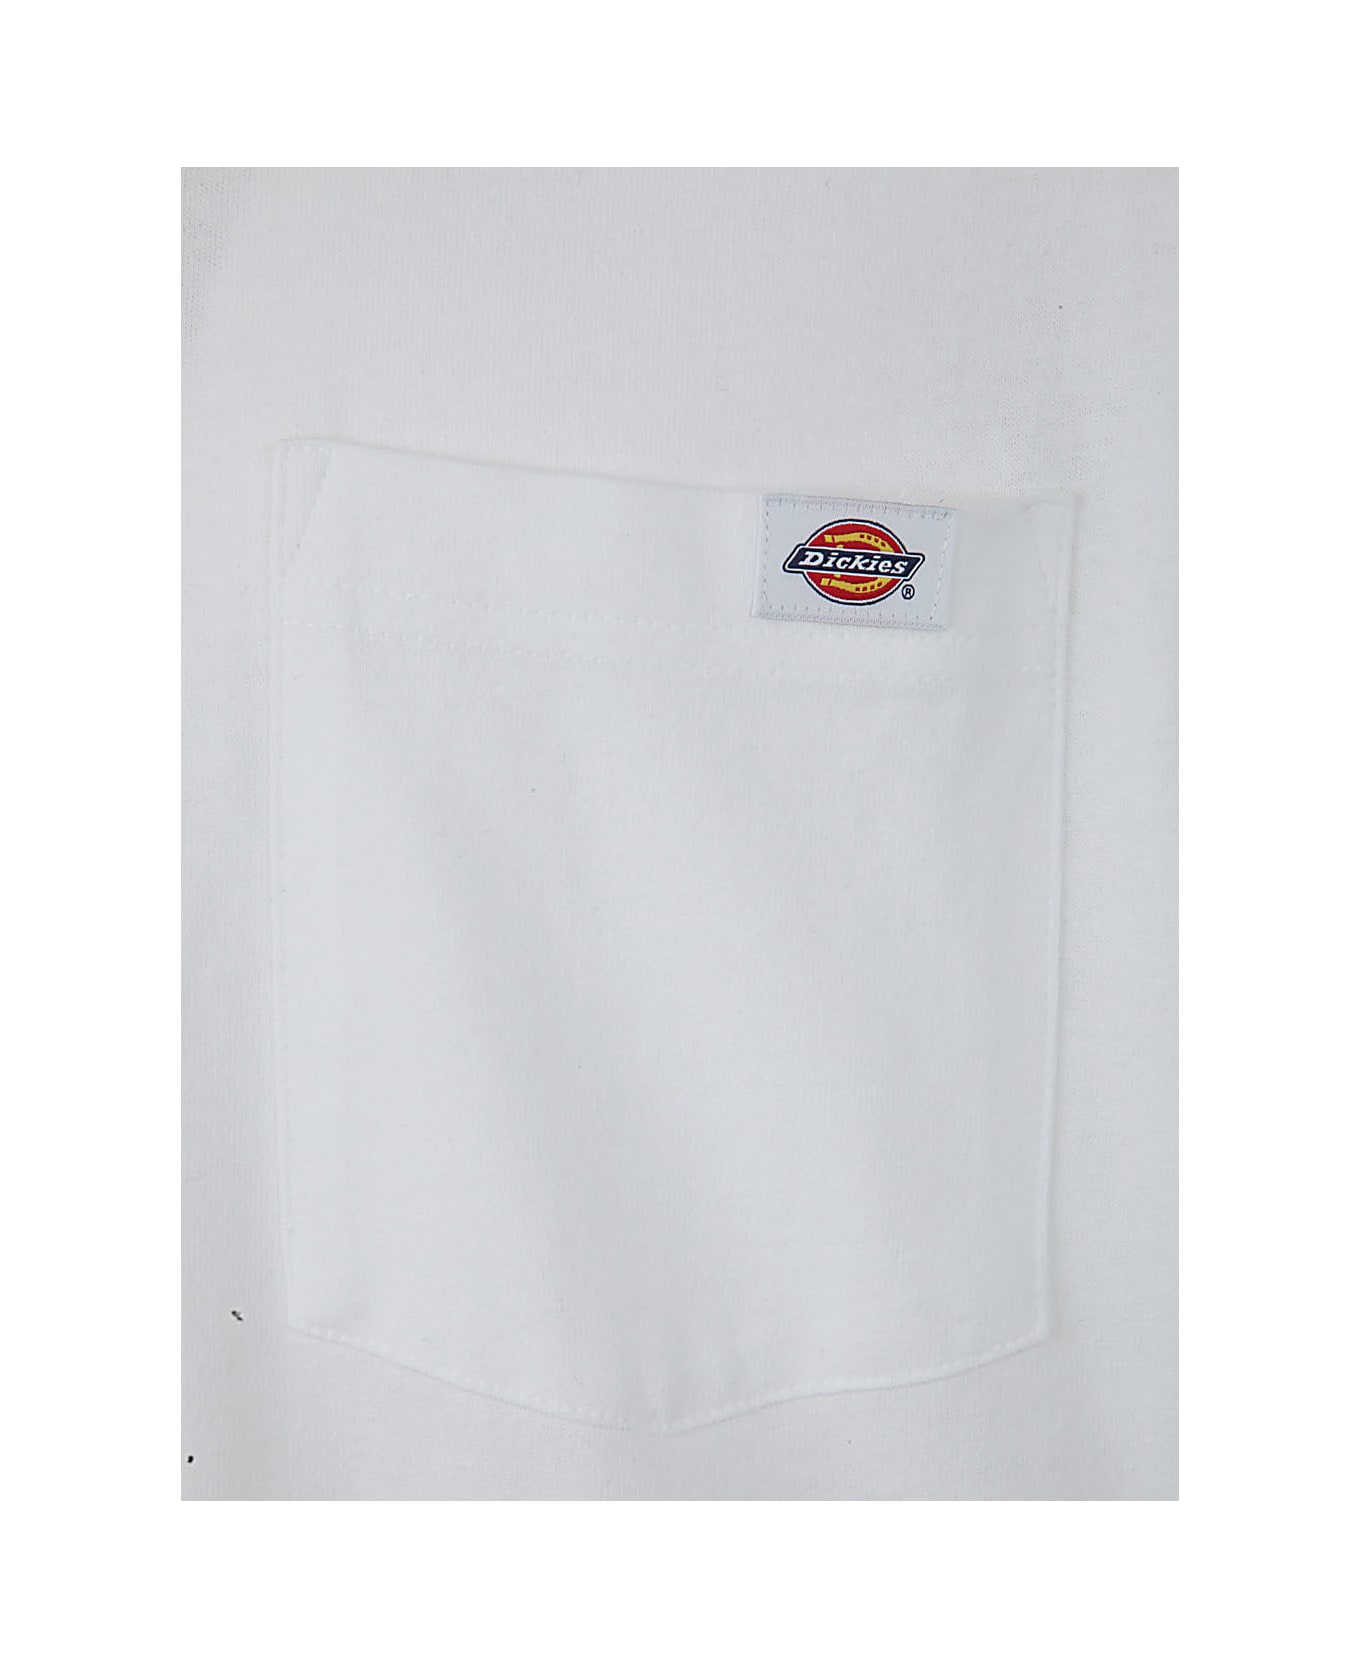 Dickies Luray Pocket Long Sleeves Tee - White